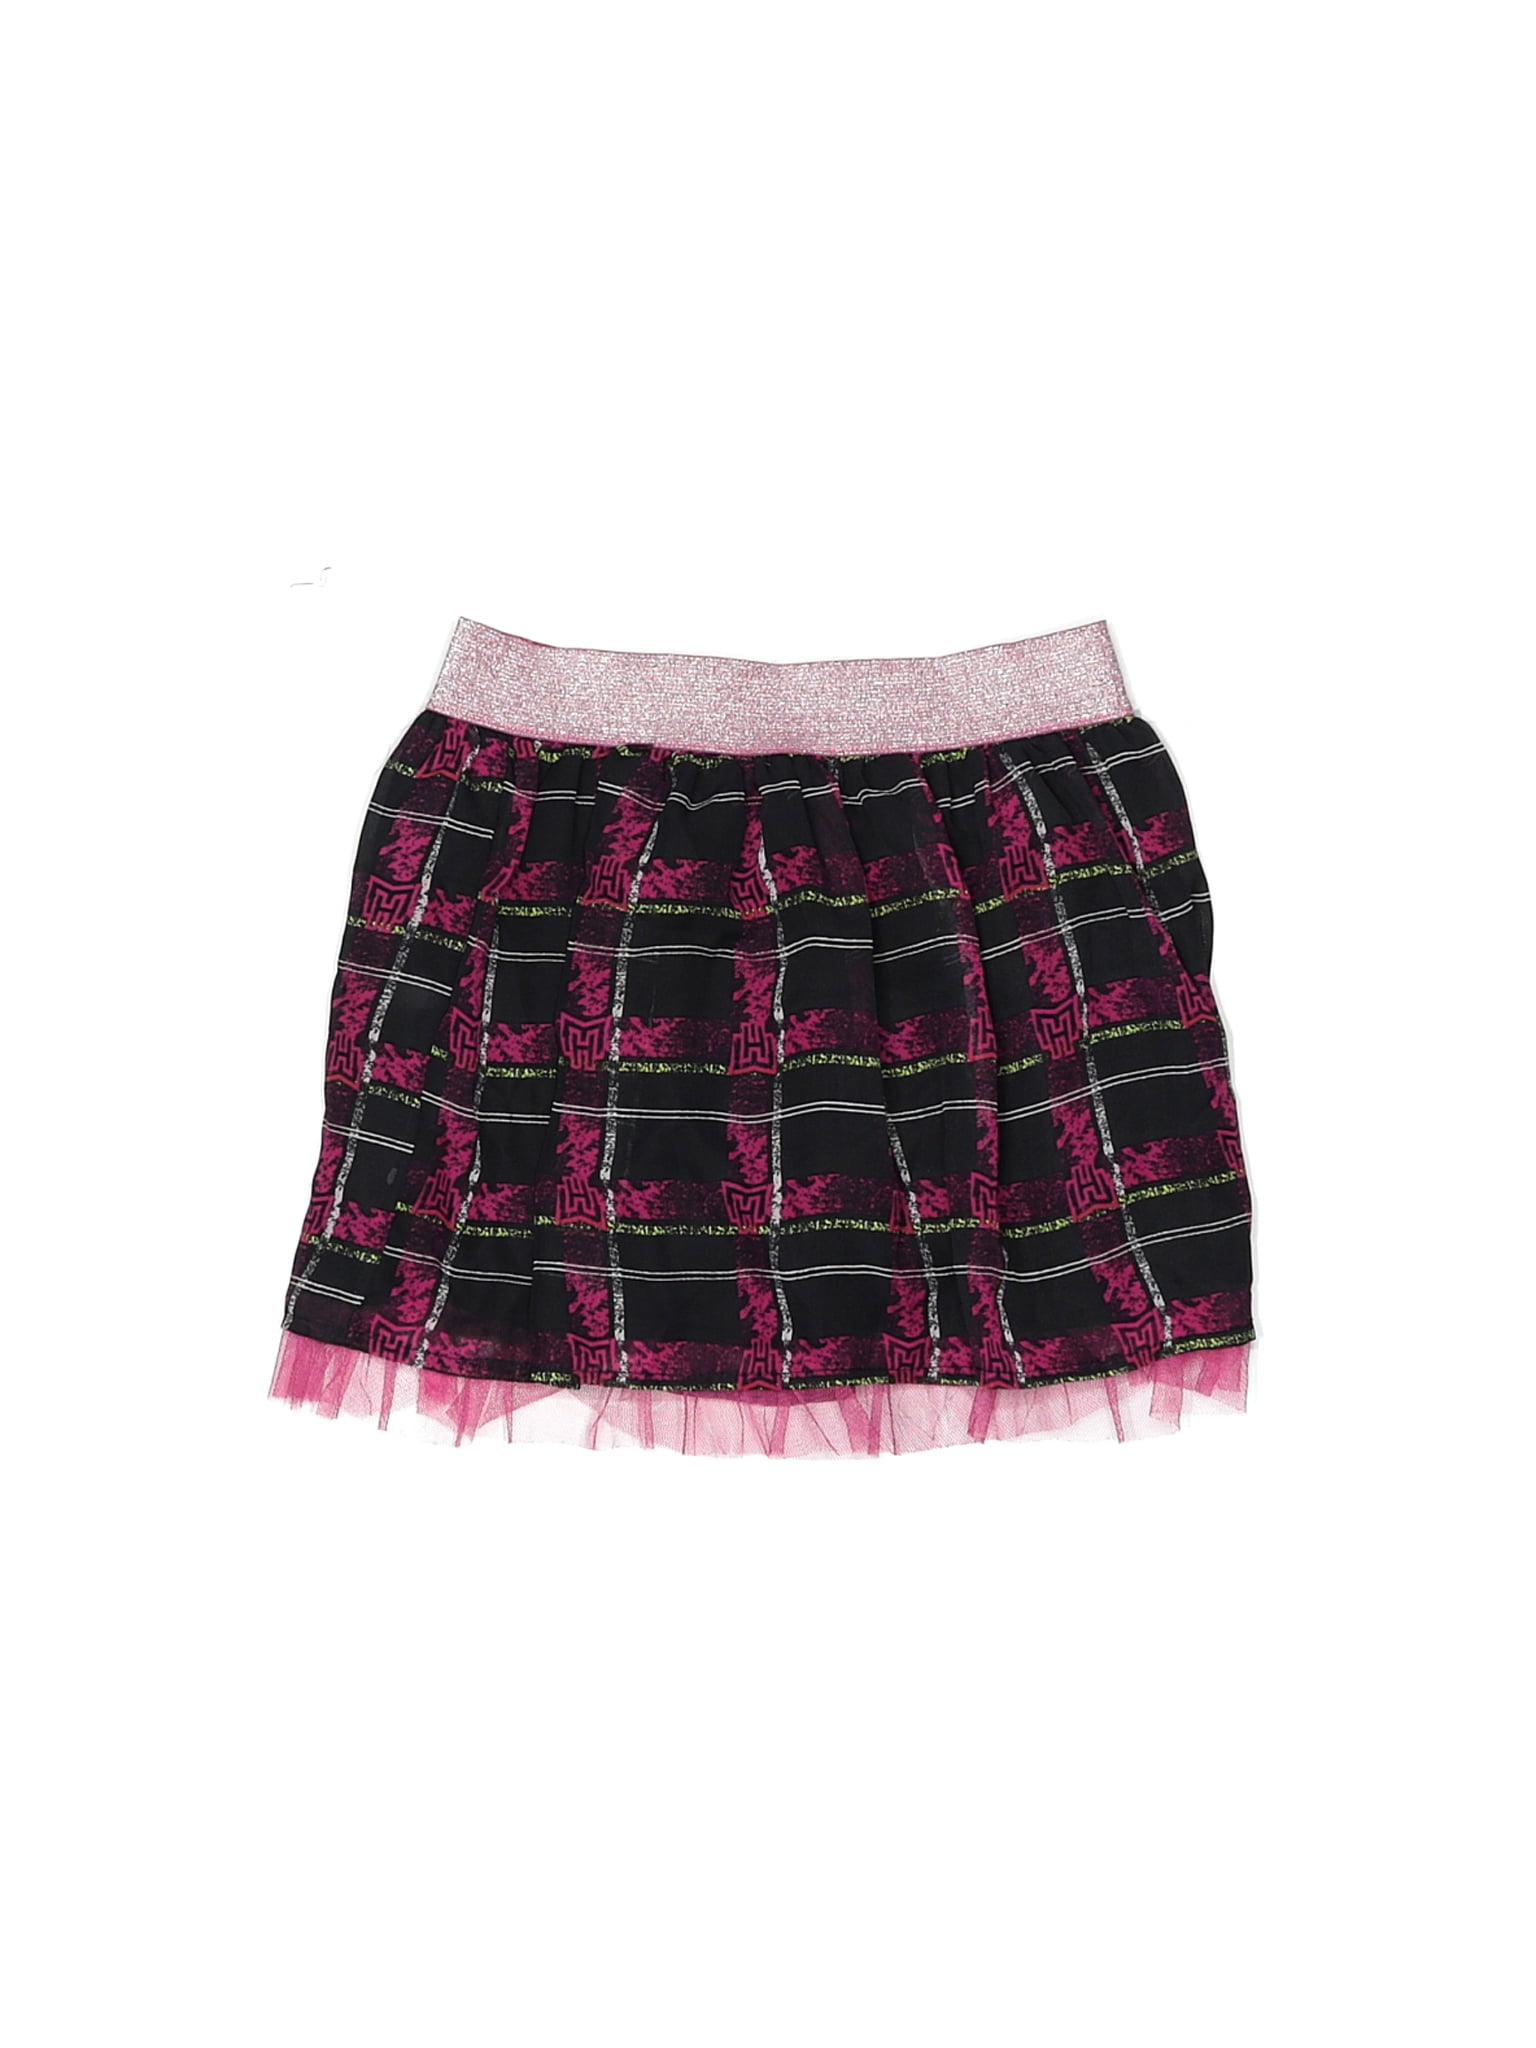 NWT Gymboree Baby Girl Skirt Skort Skorts Choice NEW Girl From Retail Store 